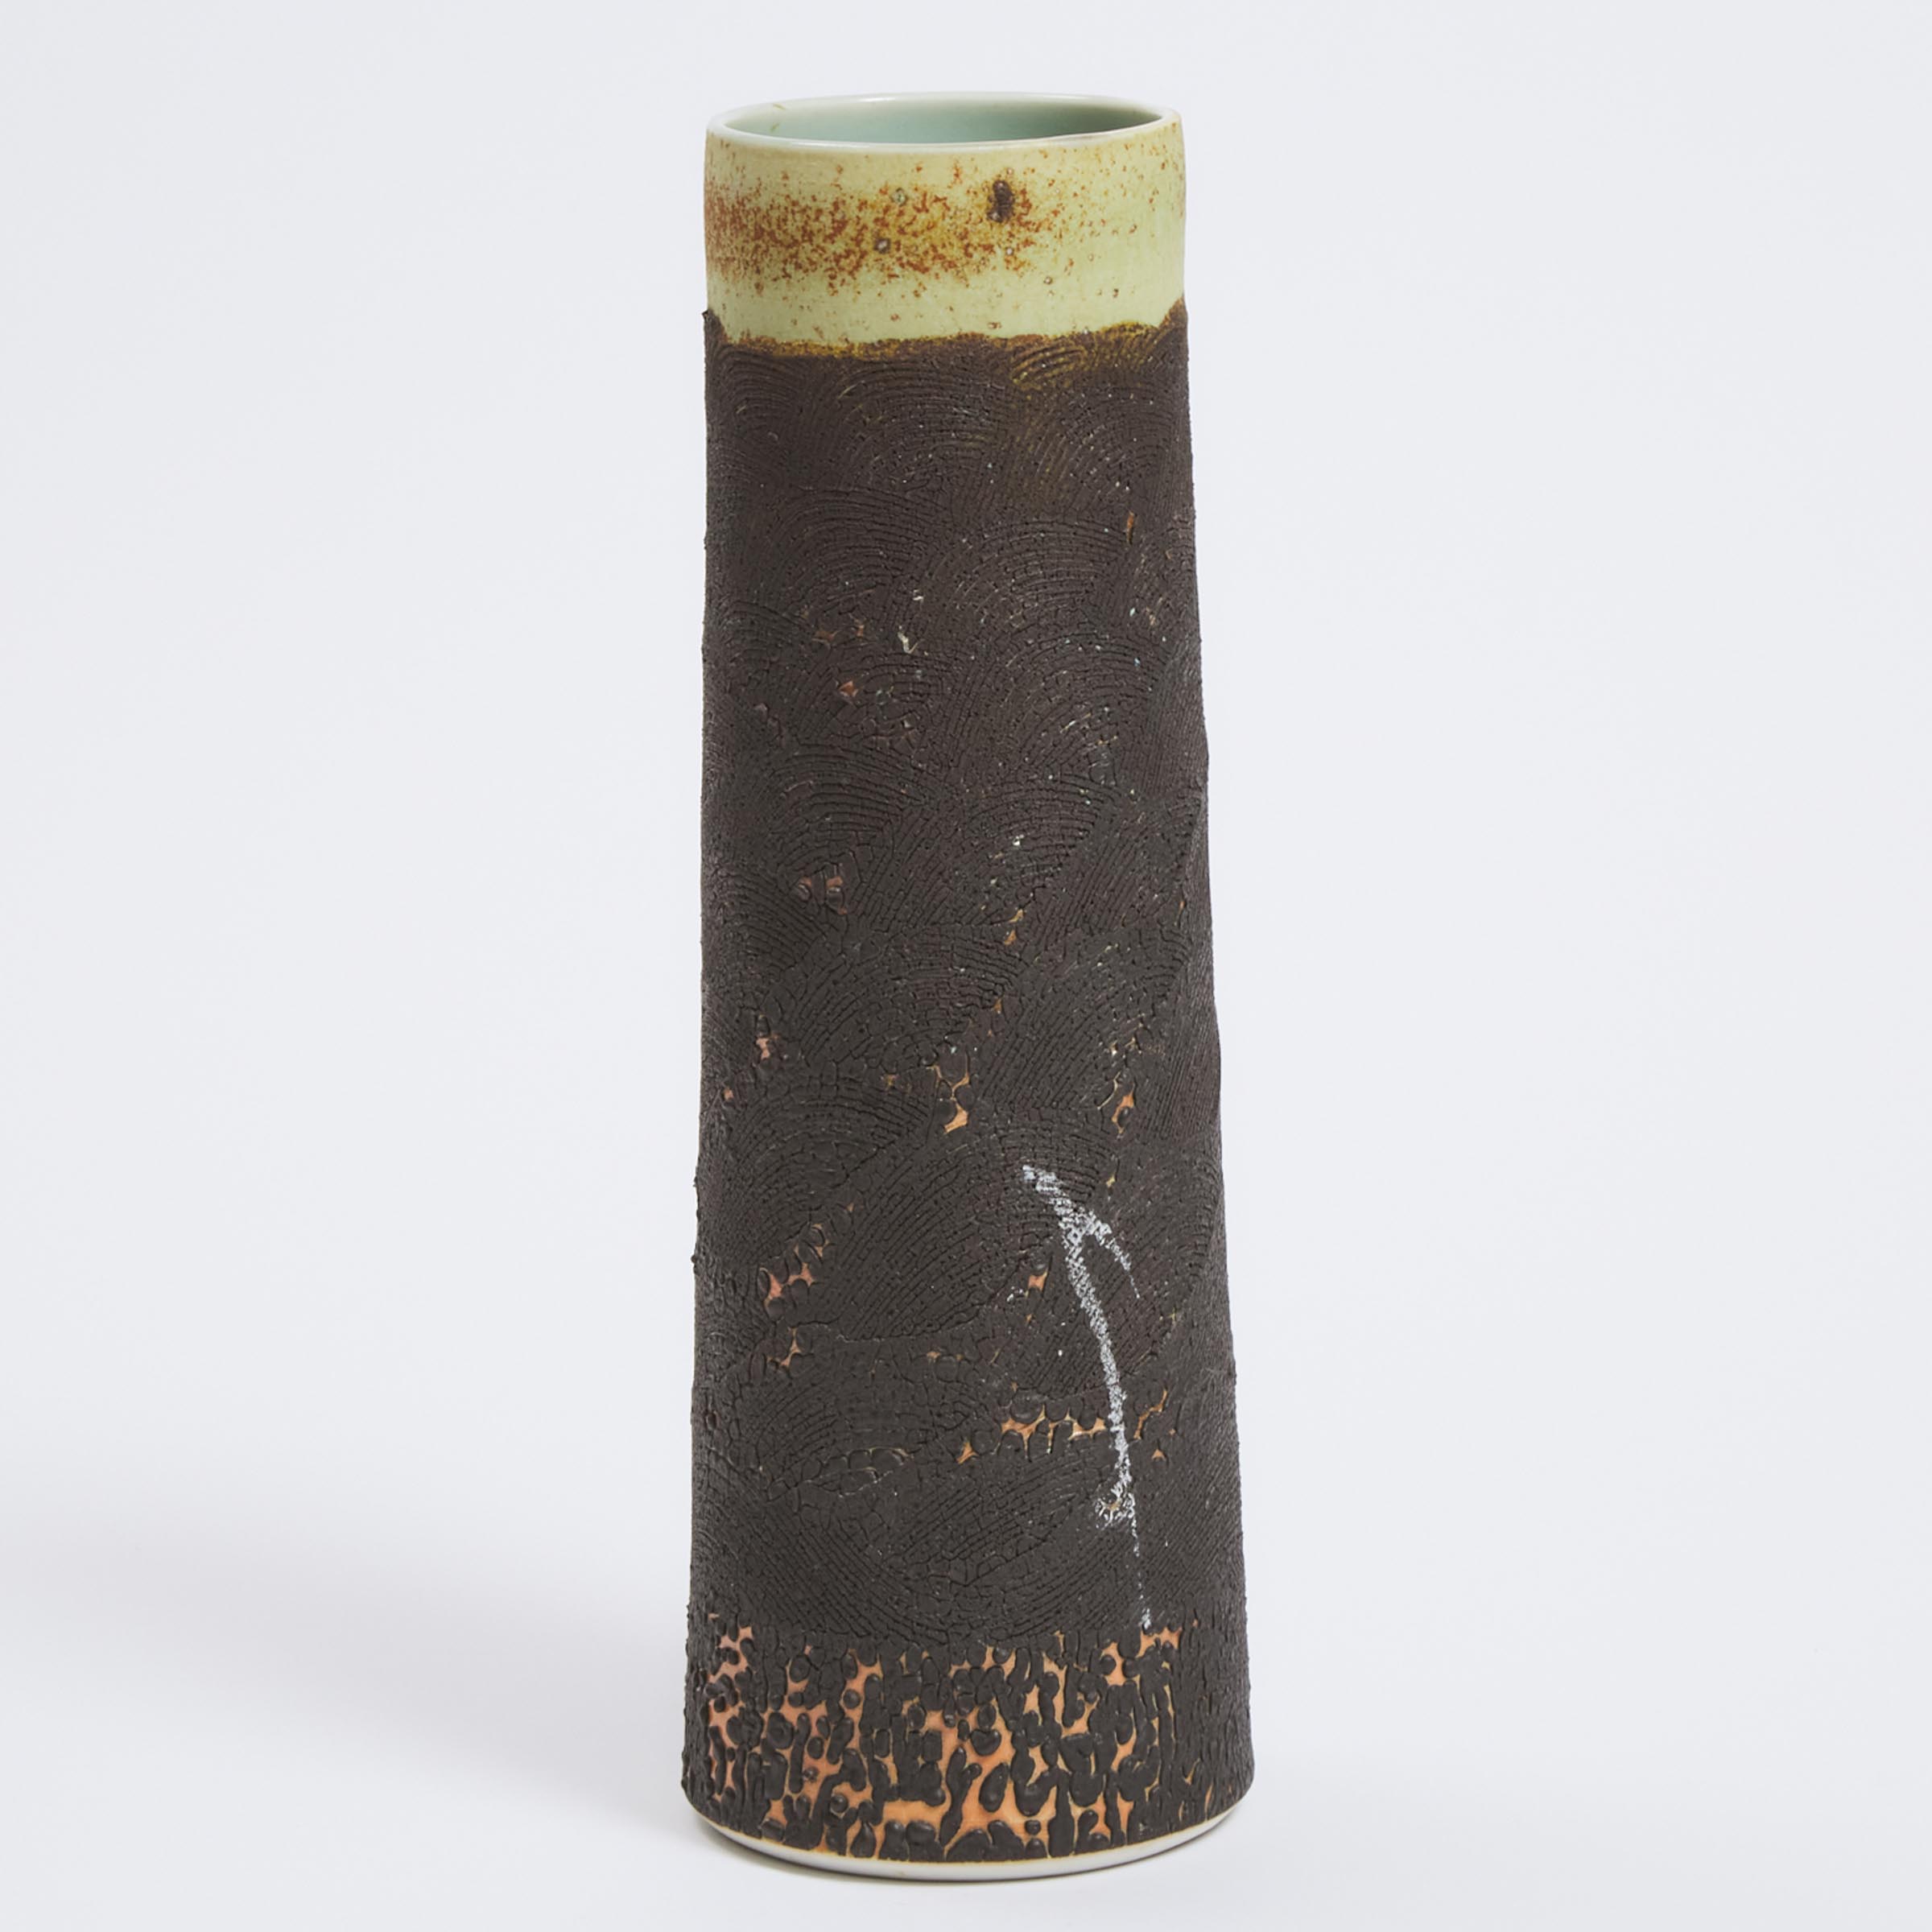 Harlan House (Canadian, b.1943), Celadon Glazed and Textured Vase, 2001